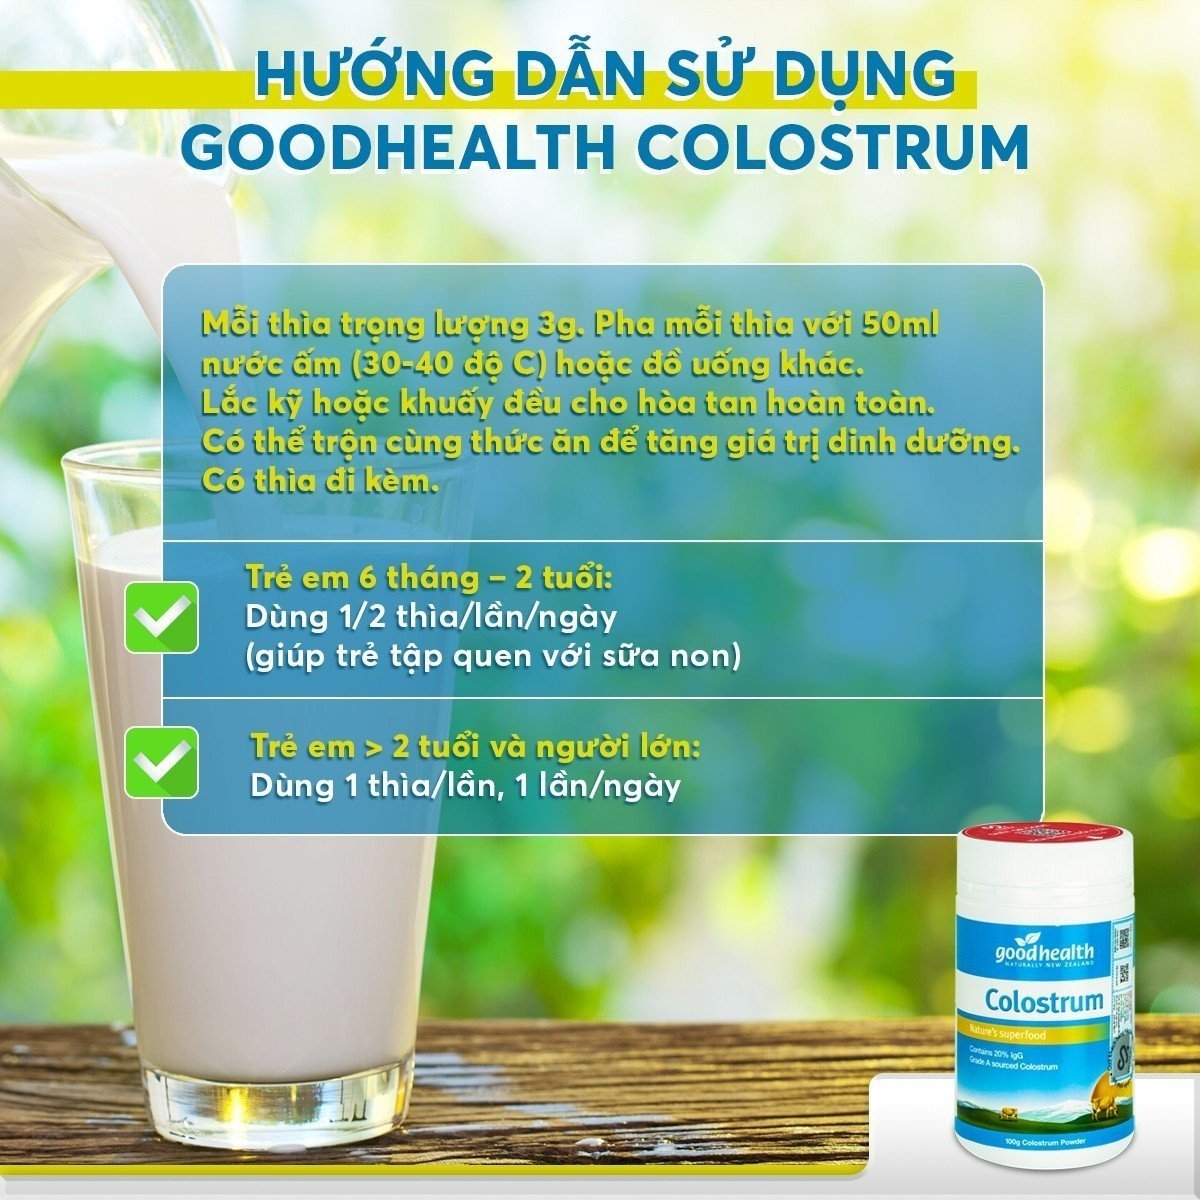 Sữa non Goodhealth Colostrum (100gr)_Nhập khẩu New Zealand